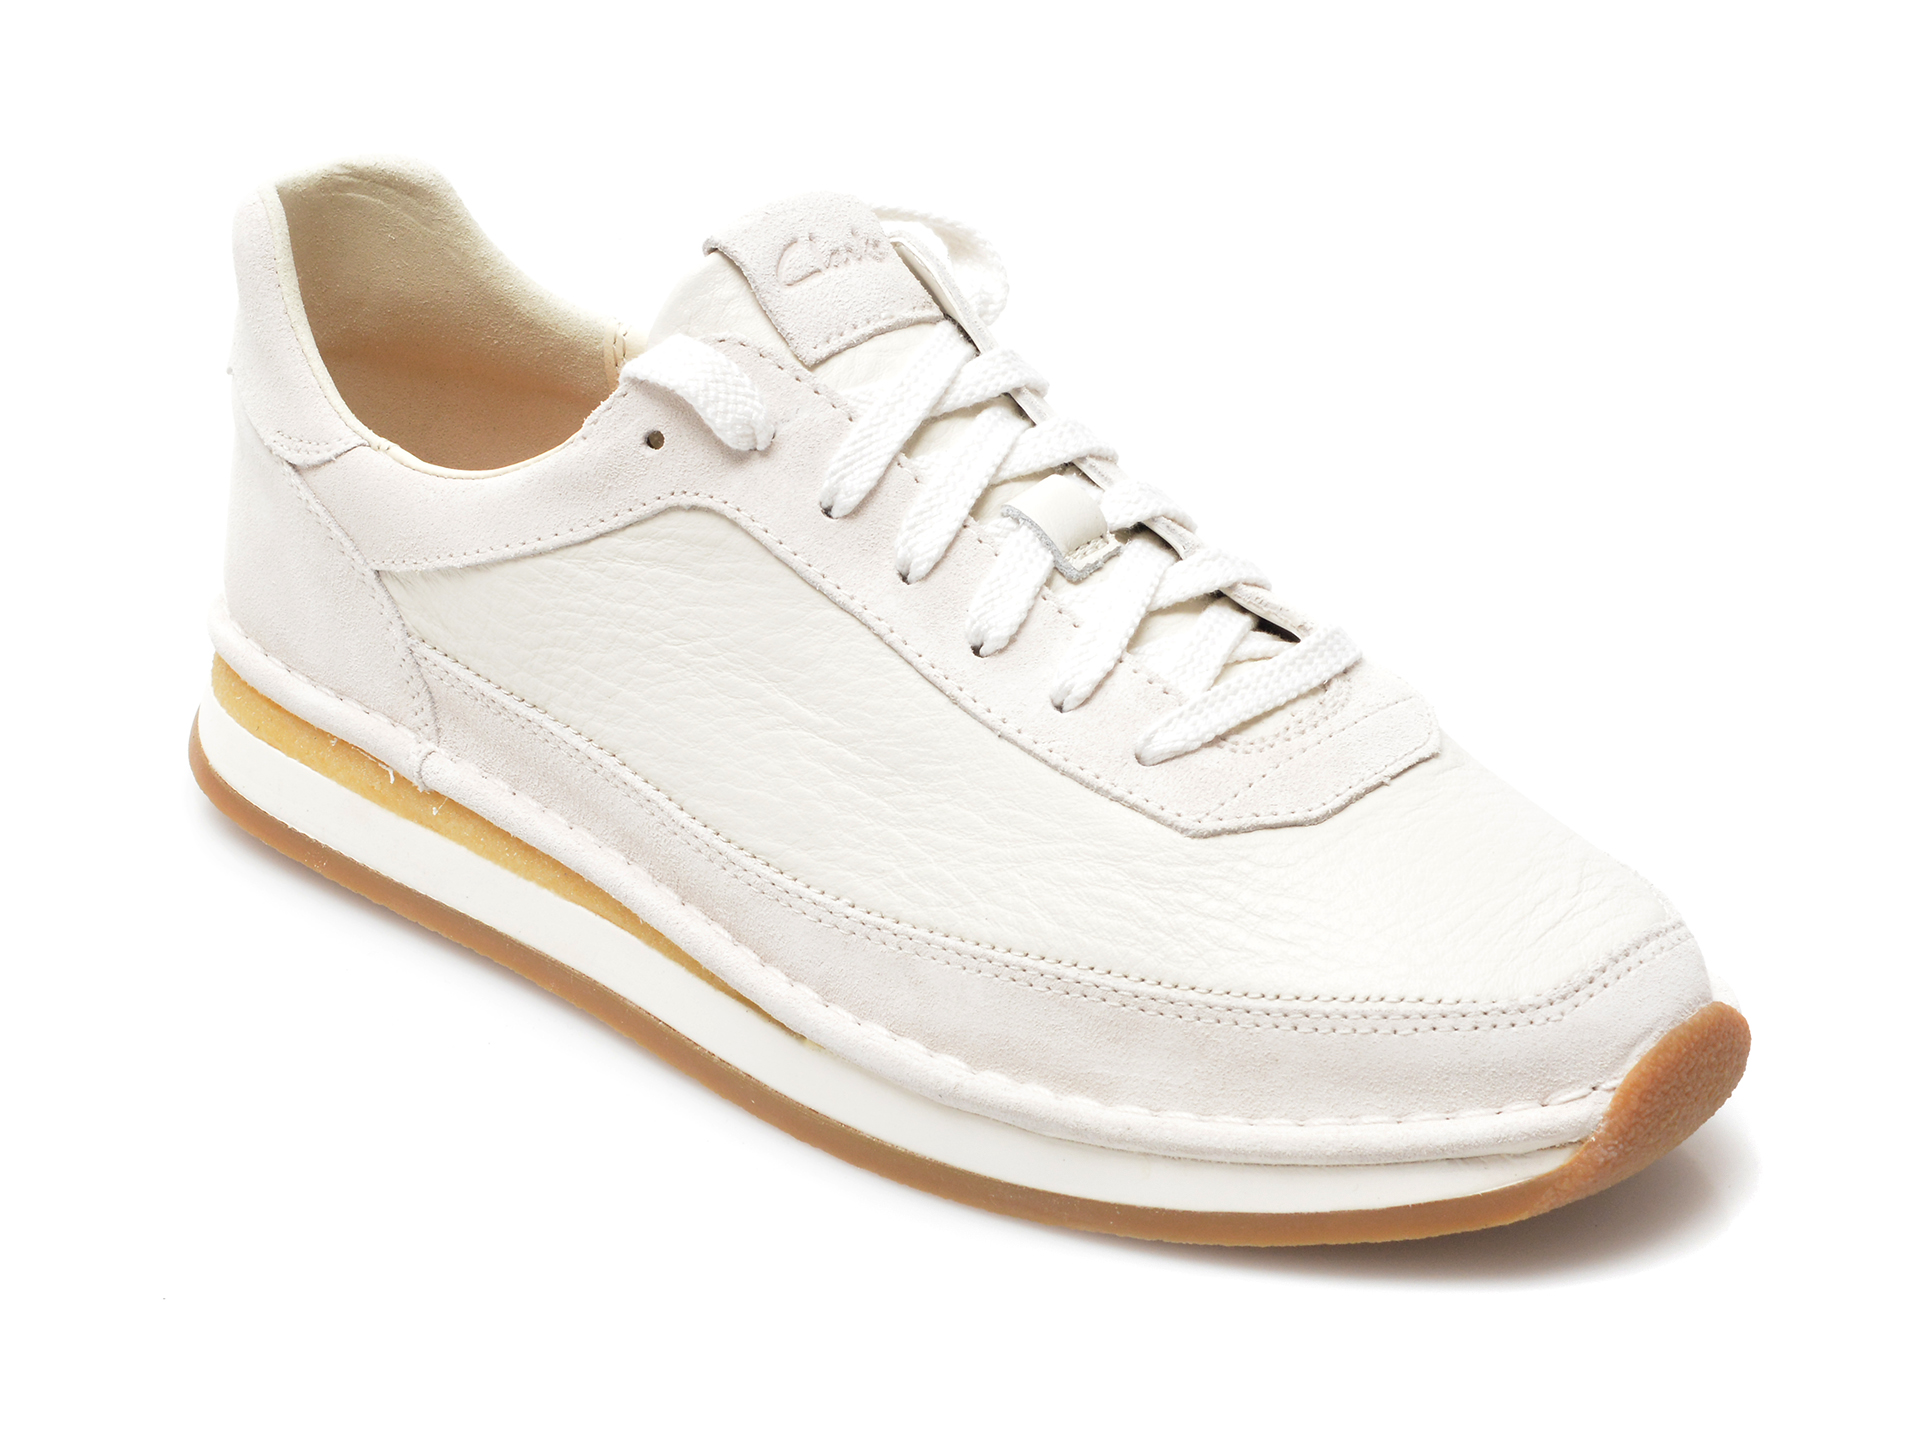 Pantofi sport CLARKS albi, CRAFT RUN LACE, din piele naturala Clarks